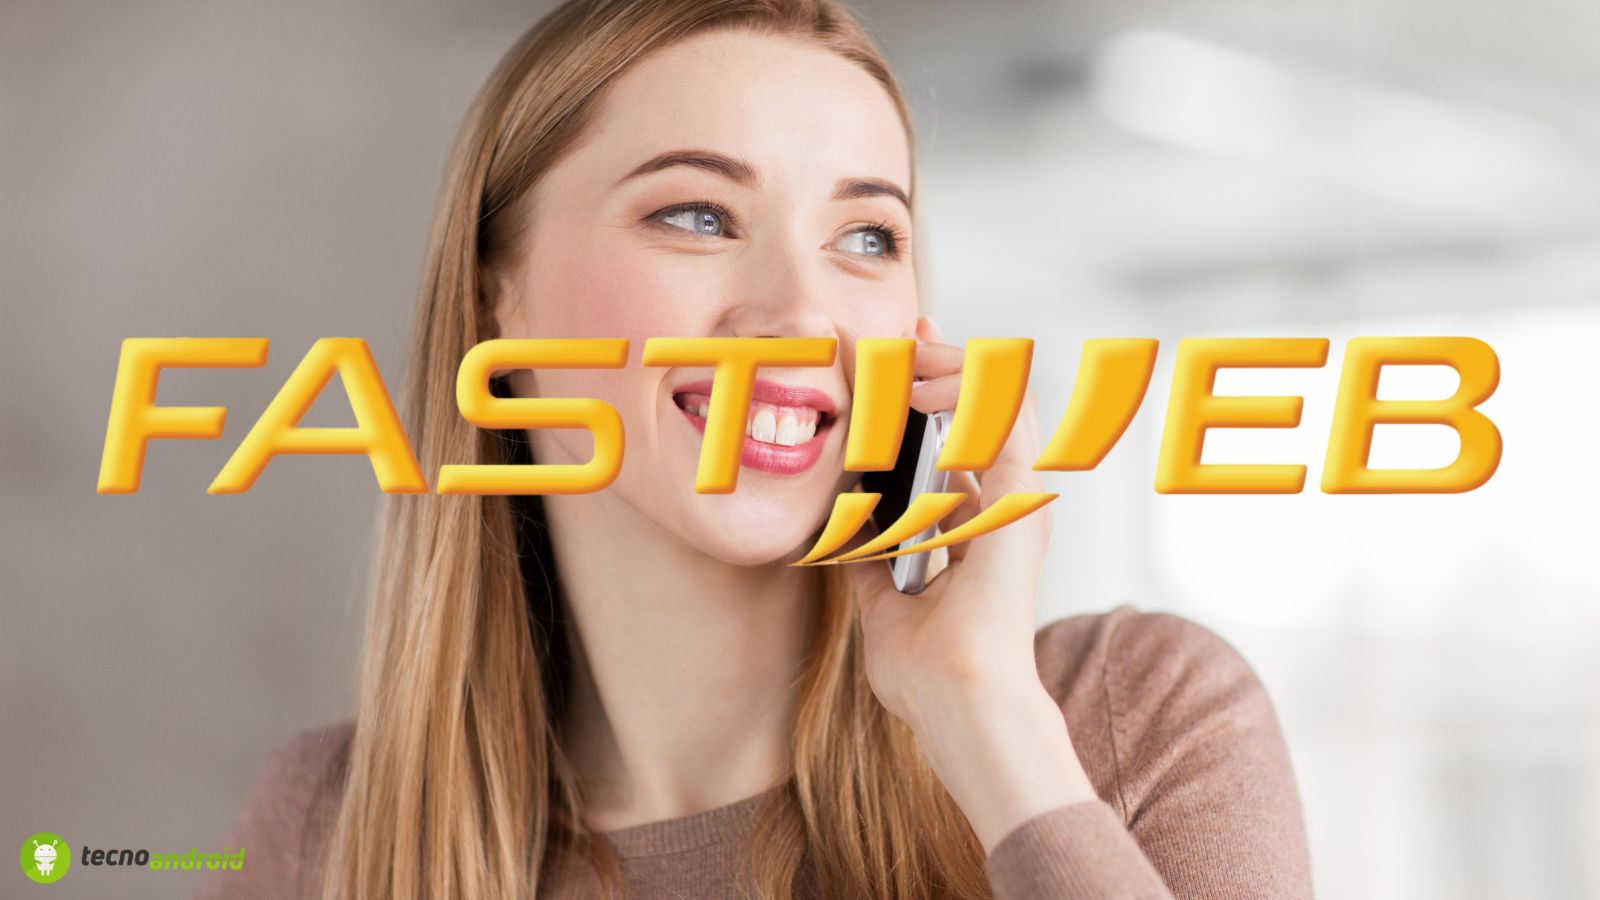 Fastweb, offerta mobile folle da 9,95 euro al mese con 5G gratis